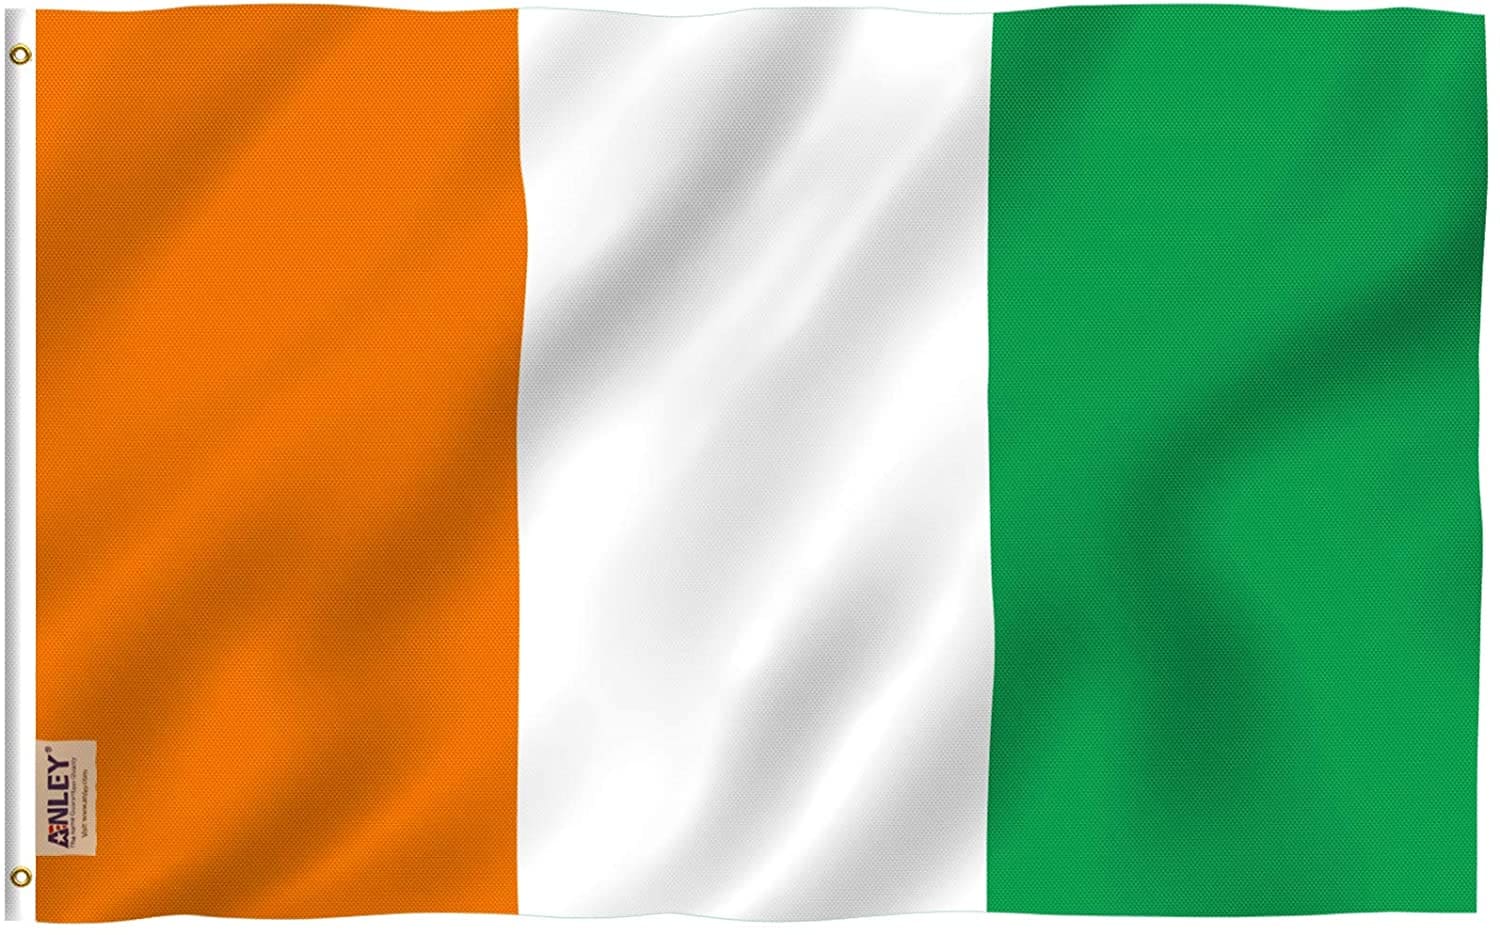 tredobbelt sammen når som helst Anley Ivory Coast Flag 5-ft W x 3-ft H International Flag in the Decorative  Banners & Flags department at Lowes.com